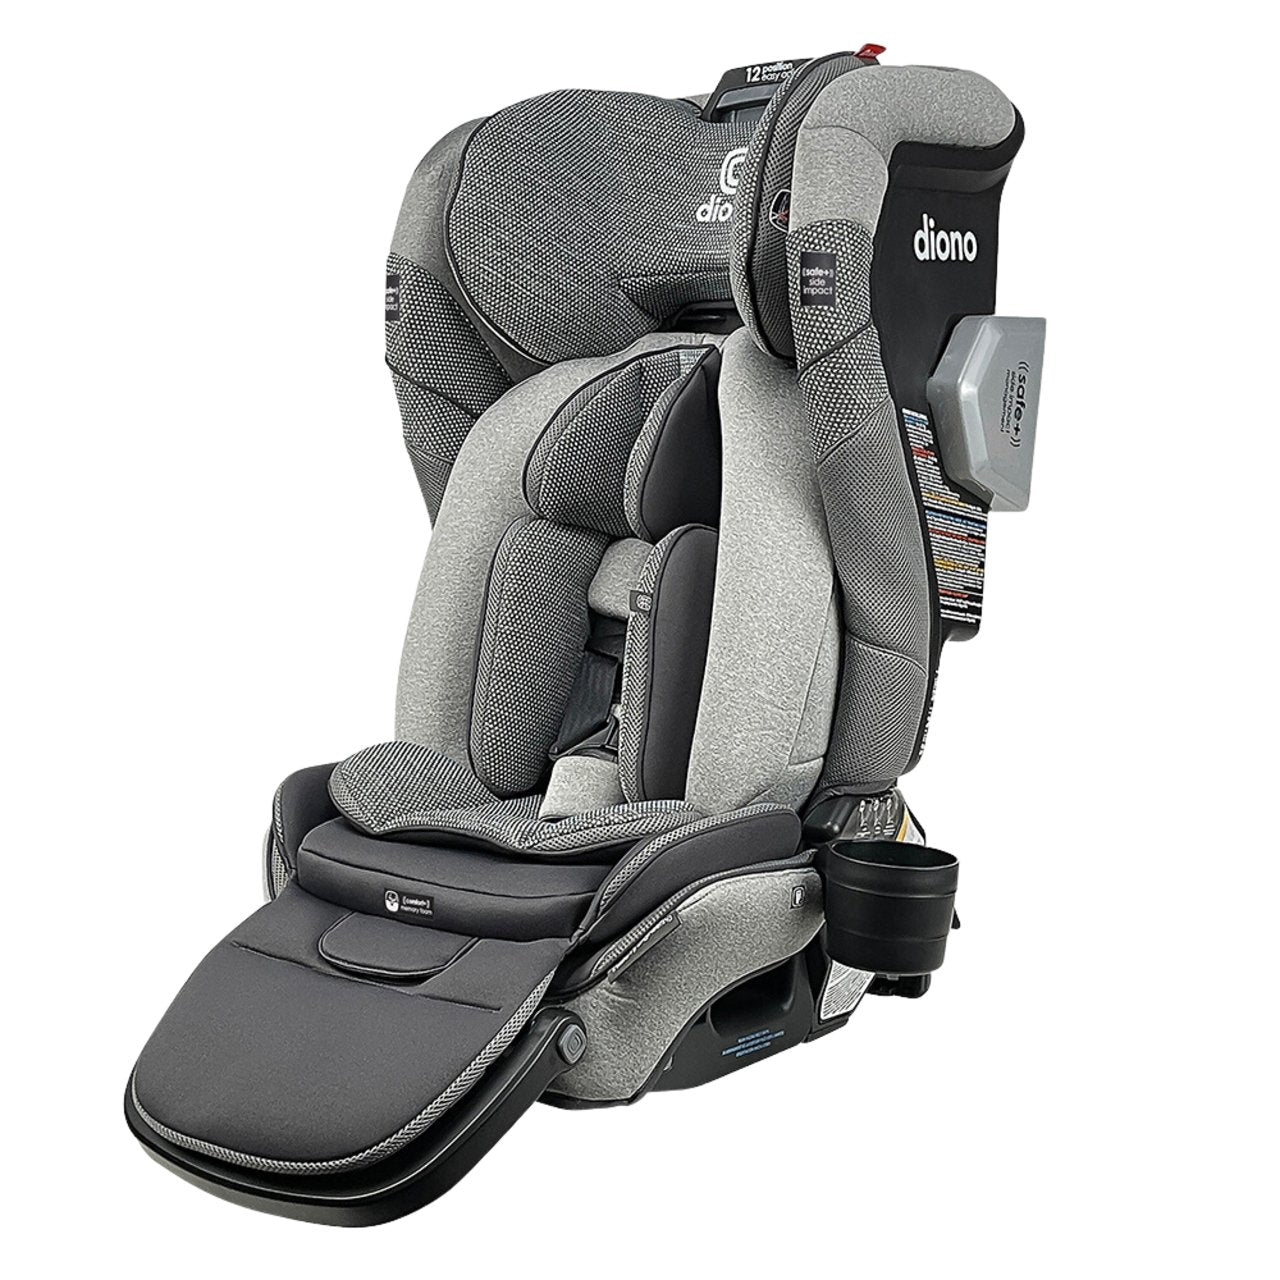 Diono Radian 3QXT+ Latch Convertible Car Seat - ANB Baby -677726530014$500 - $1000